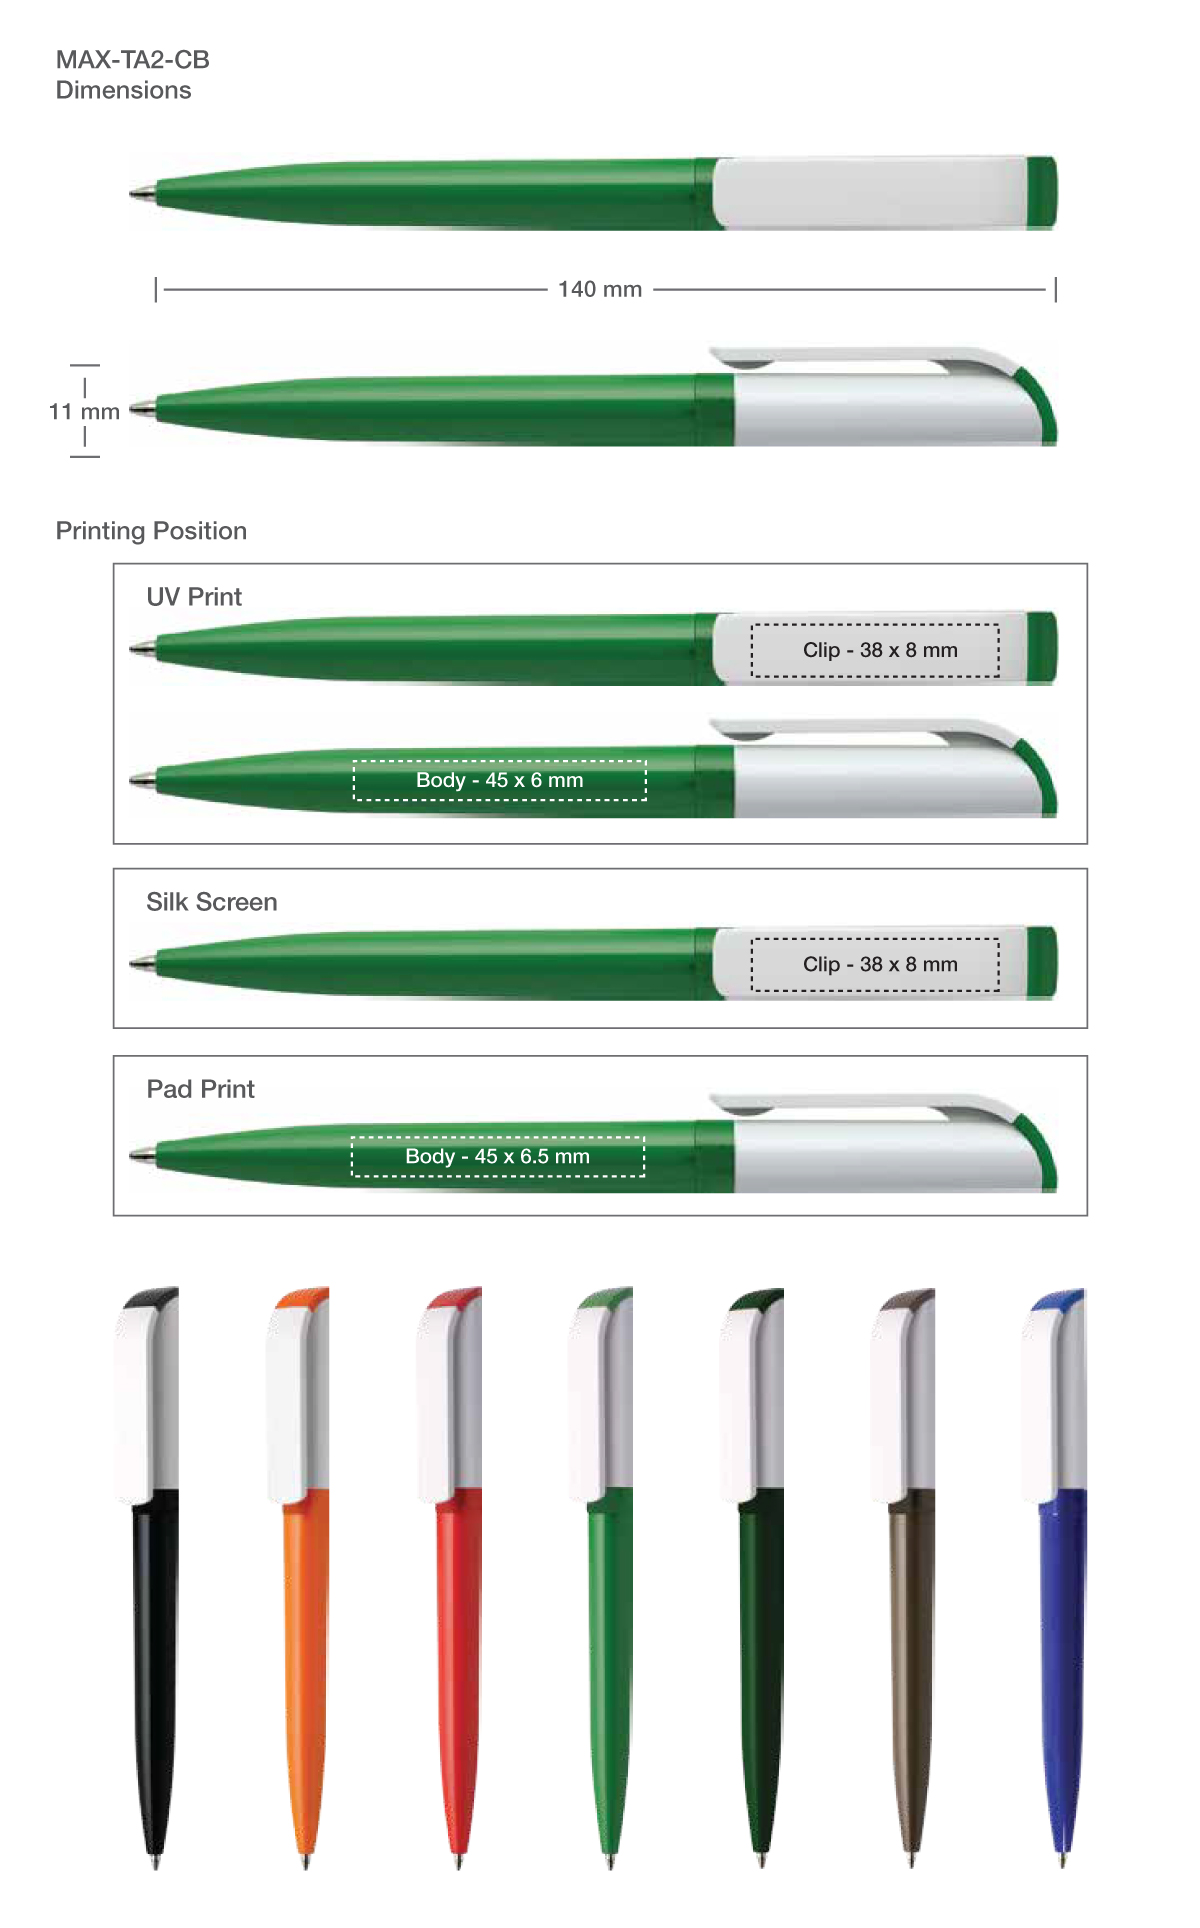 Maxema Pen Printing Details